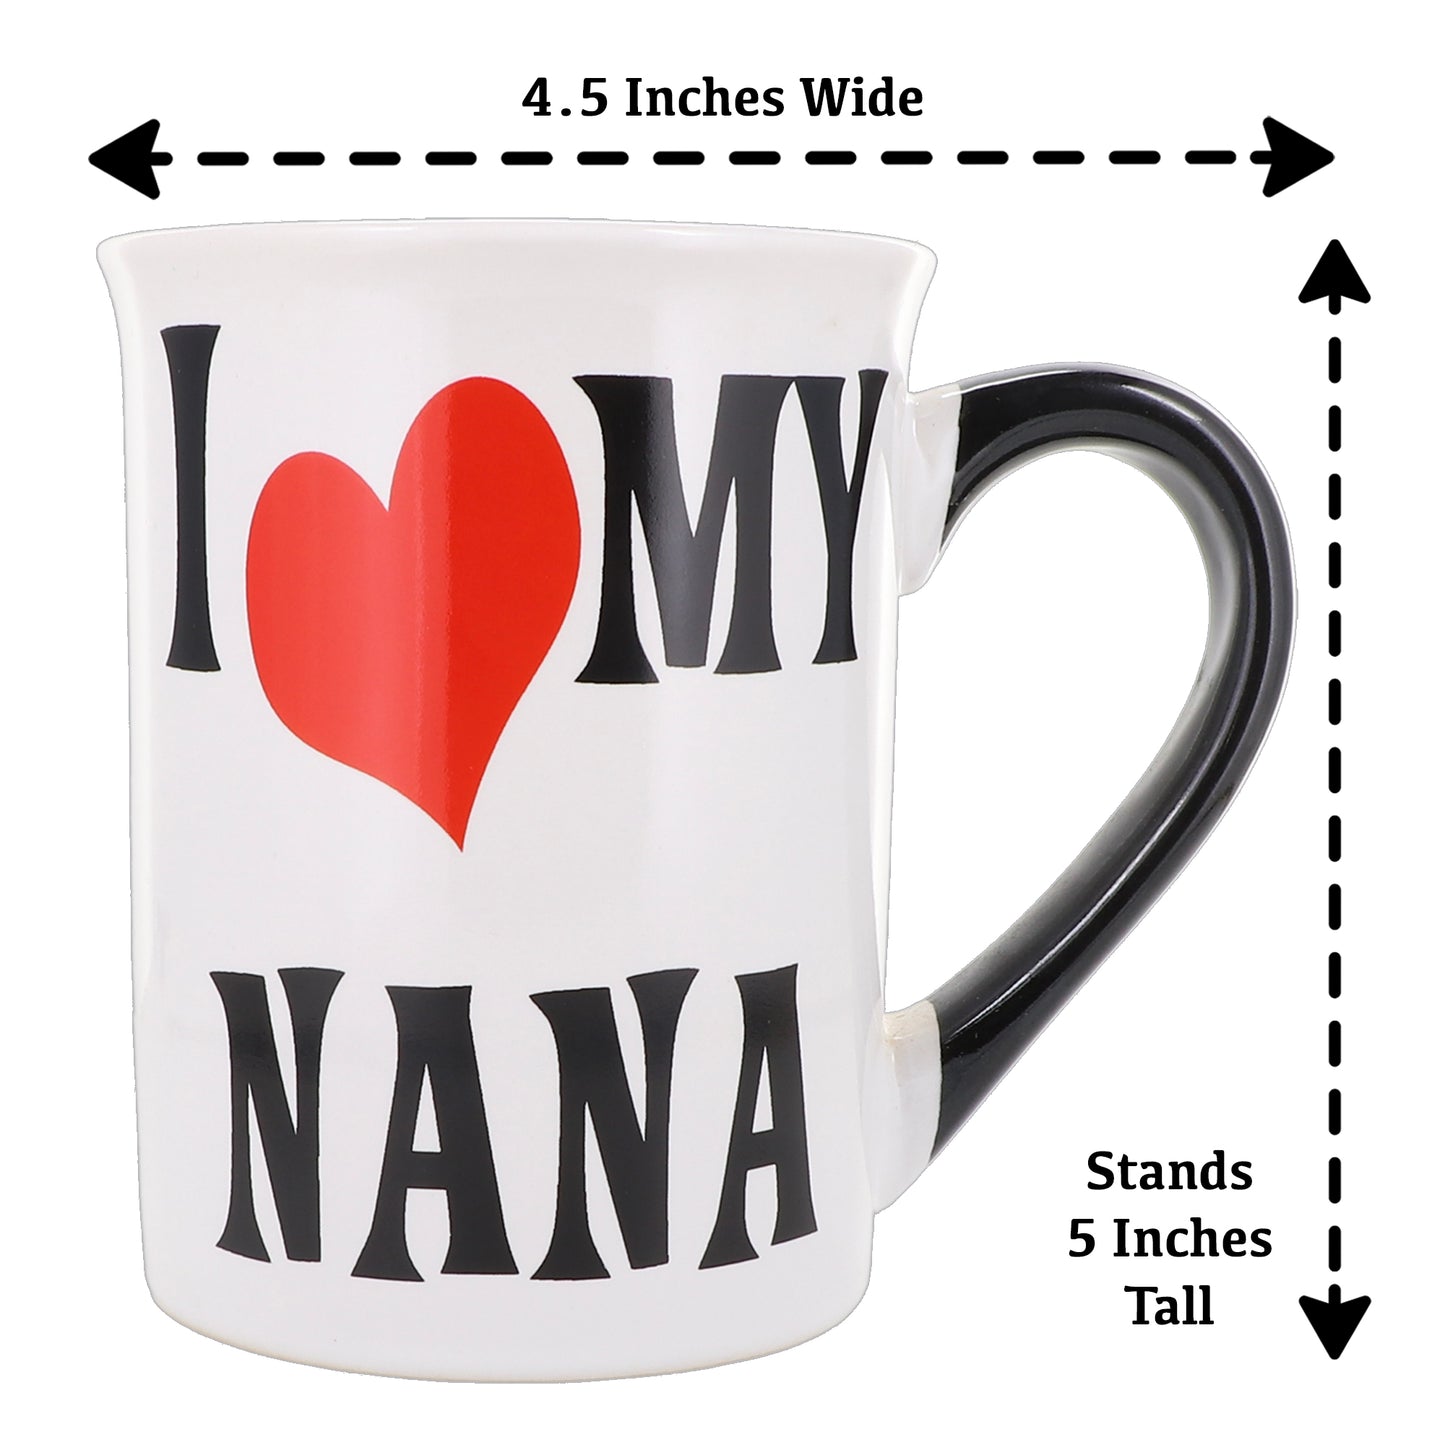 Cottage Creek Nana Mug, Nana Coffee Mug for Nana, 16oz., 6" Multicolored